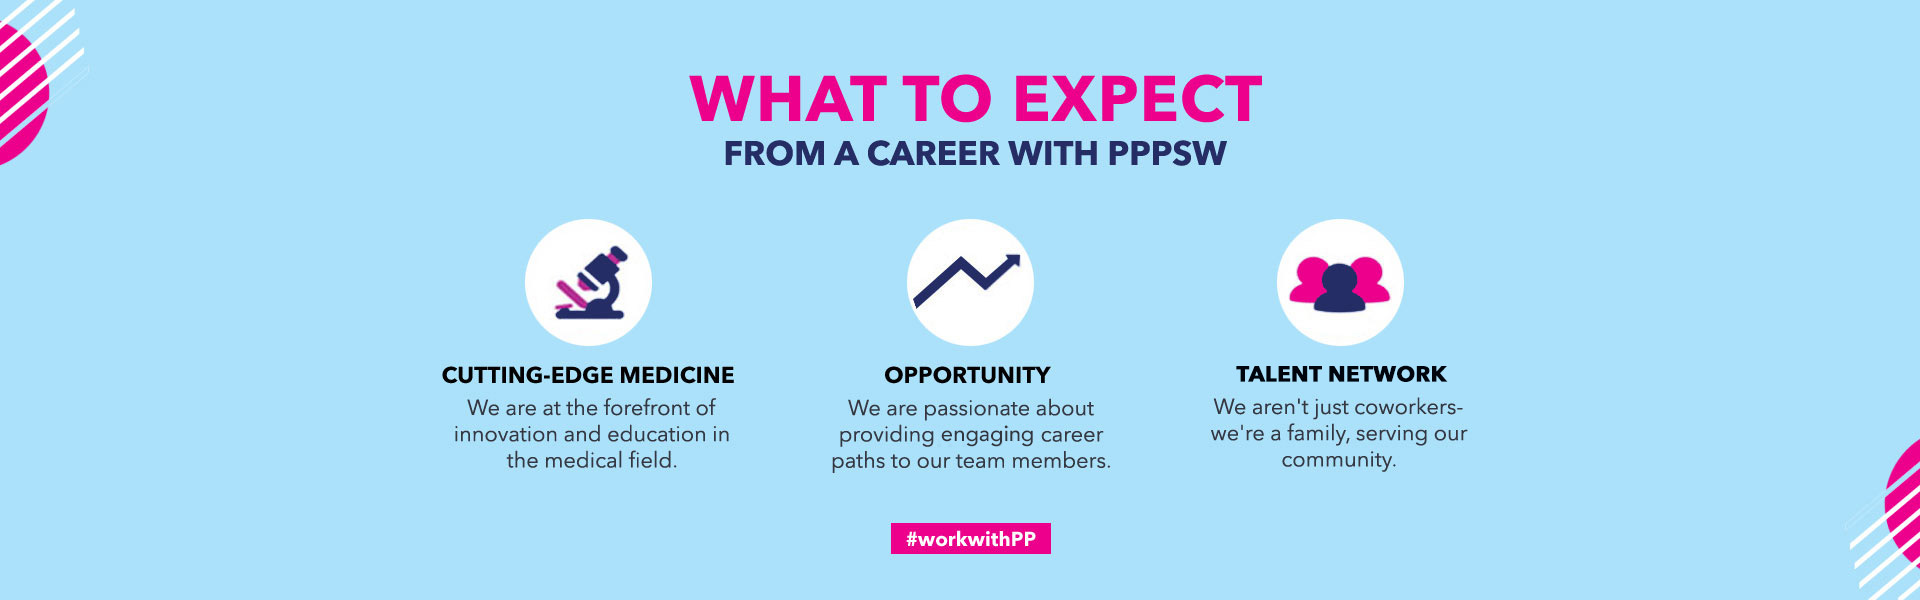 PPPSW Careers